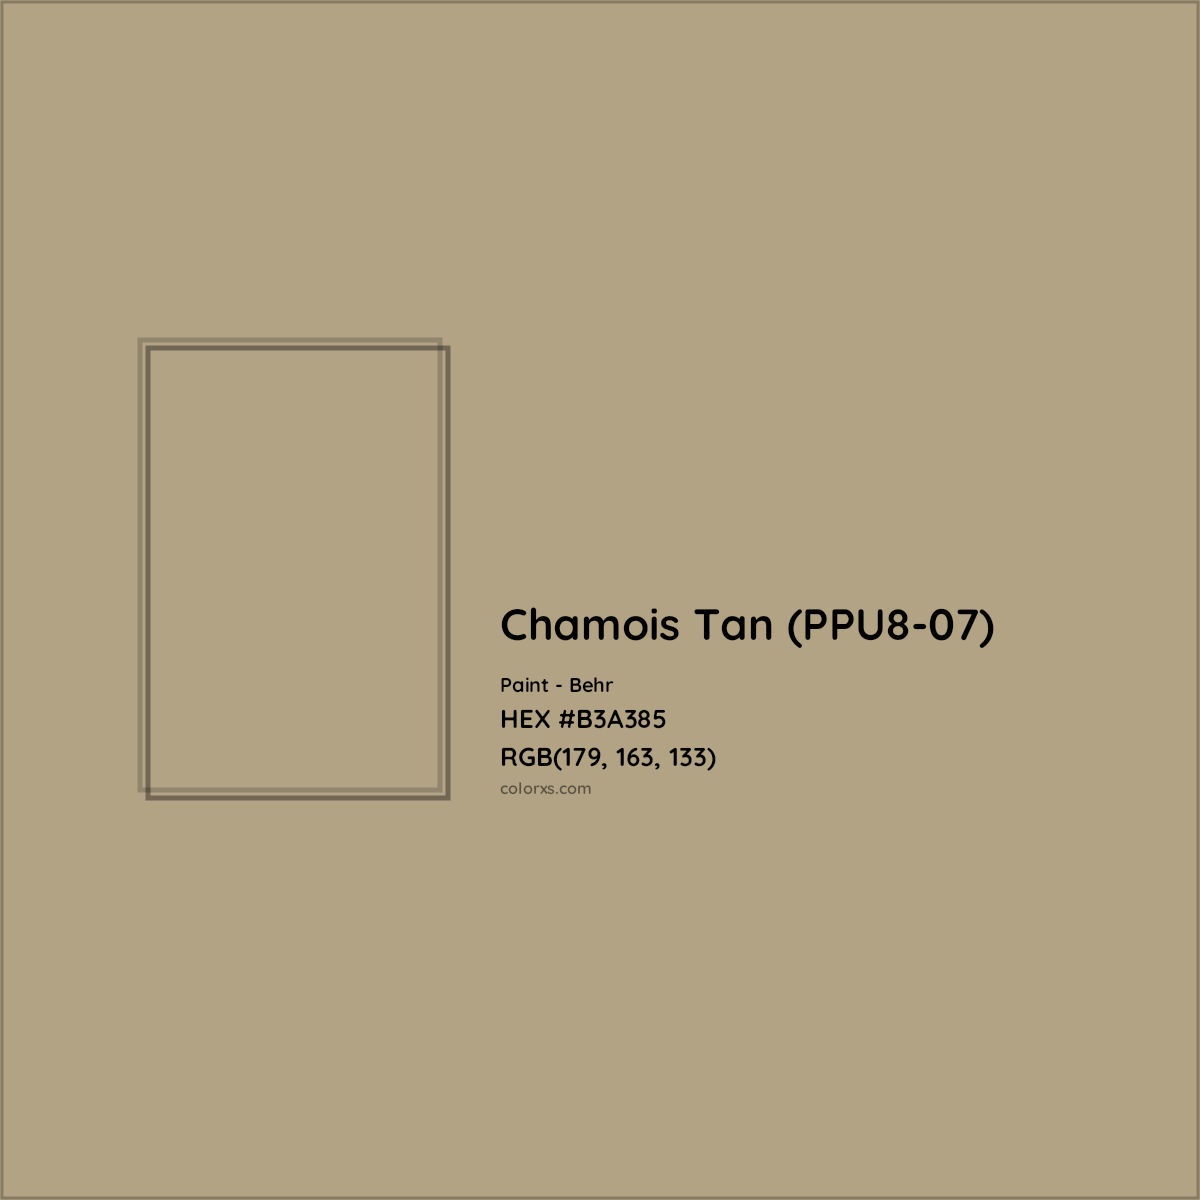 HEX #B3A385 Chamois Tan (PPU8-07) Paint Behr - Color Code